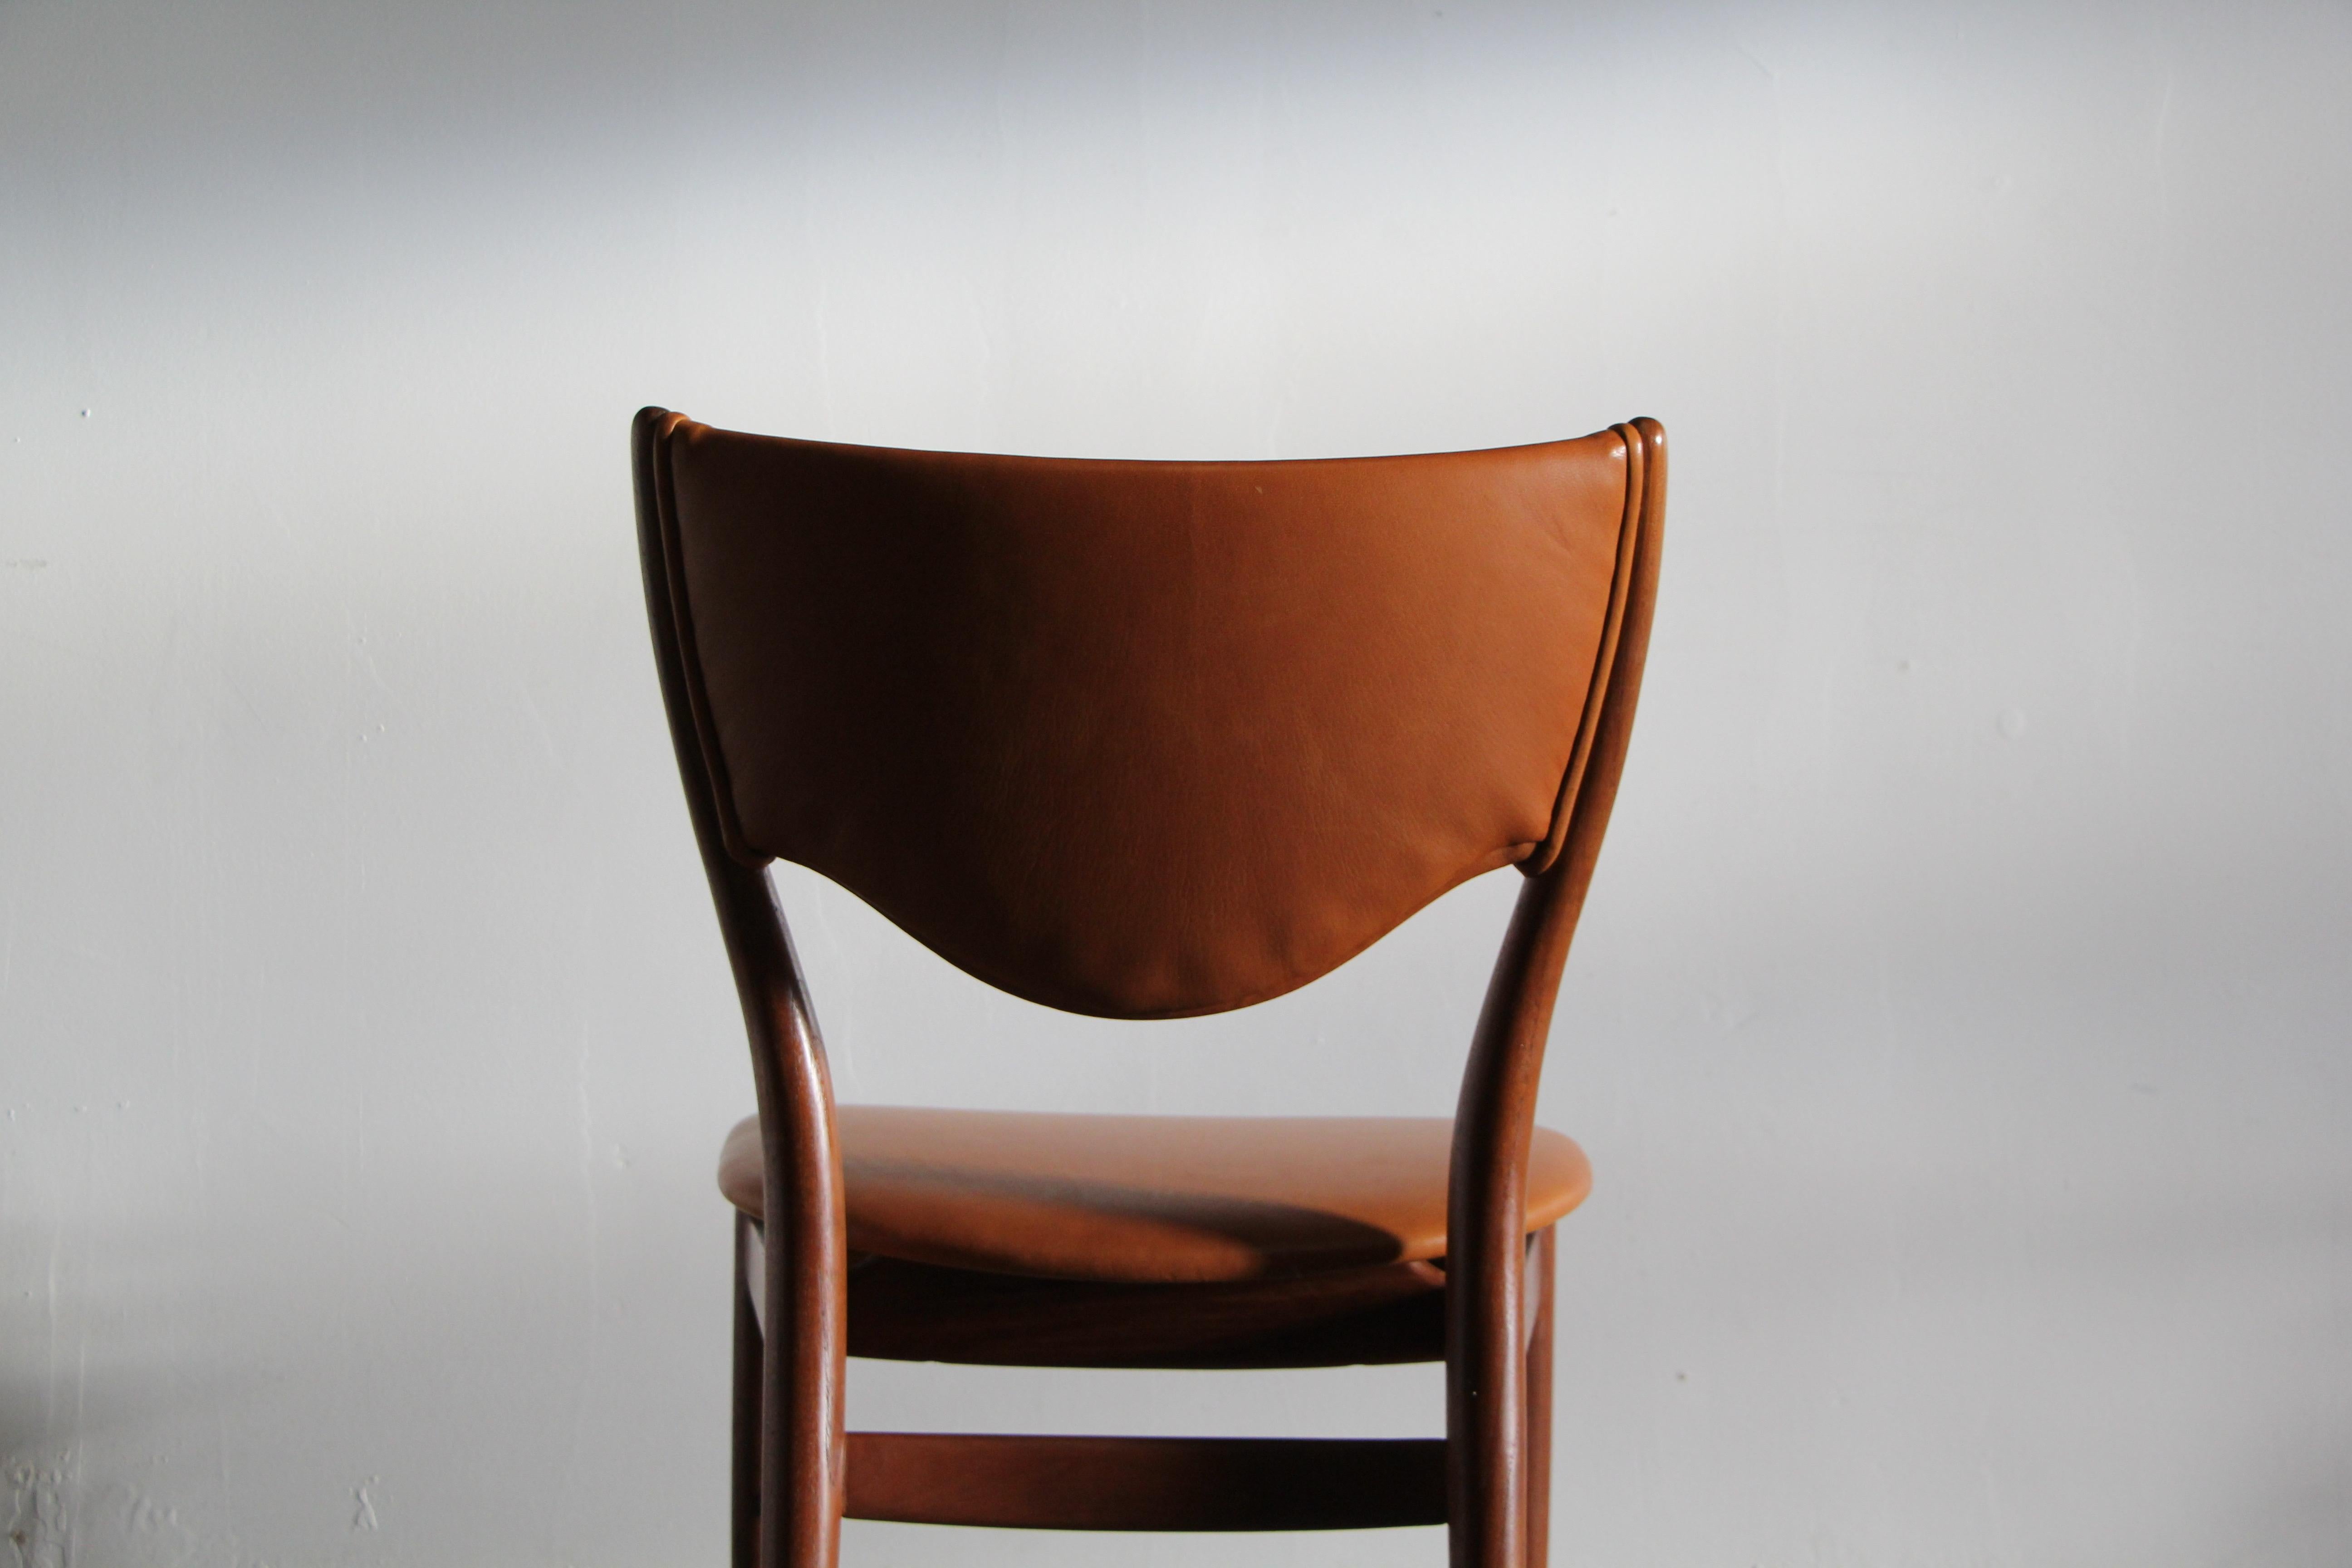 Mid-20th Century Finn Juhl “BO 63” Sculpted Teak Dining Chairs in Cognac Goatskin Leather, 1950s For Sale